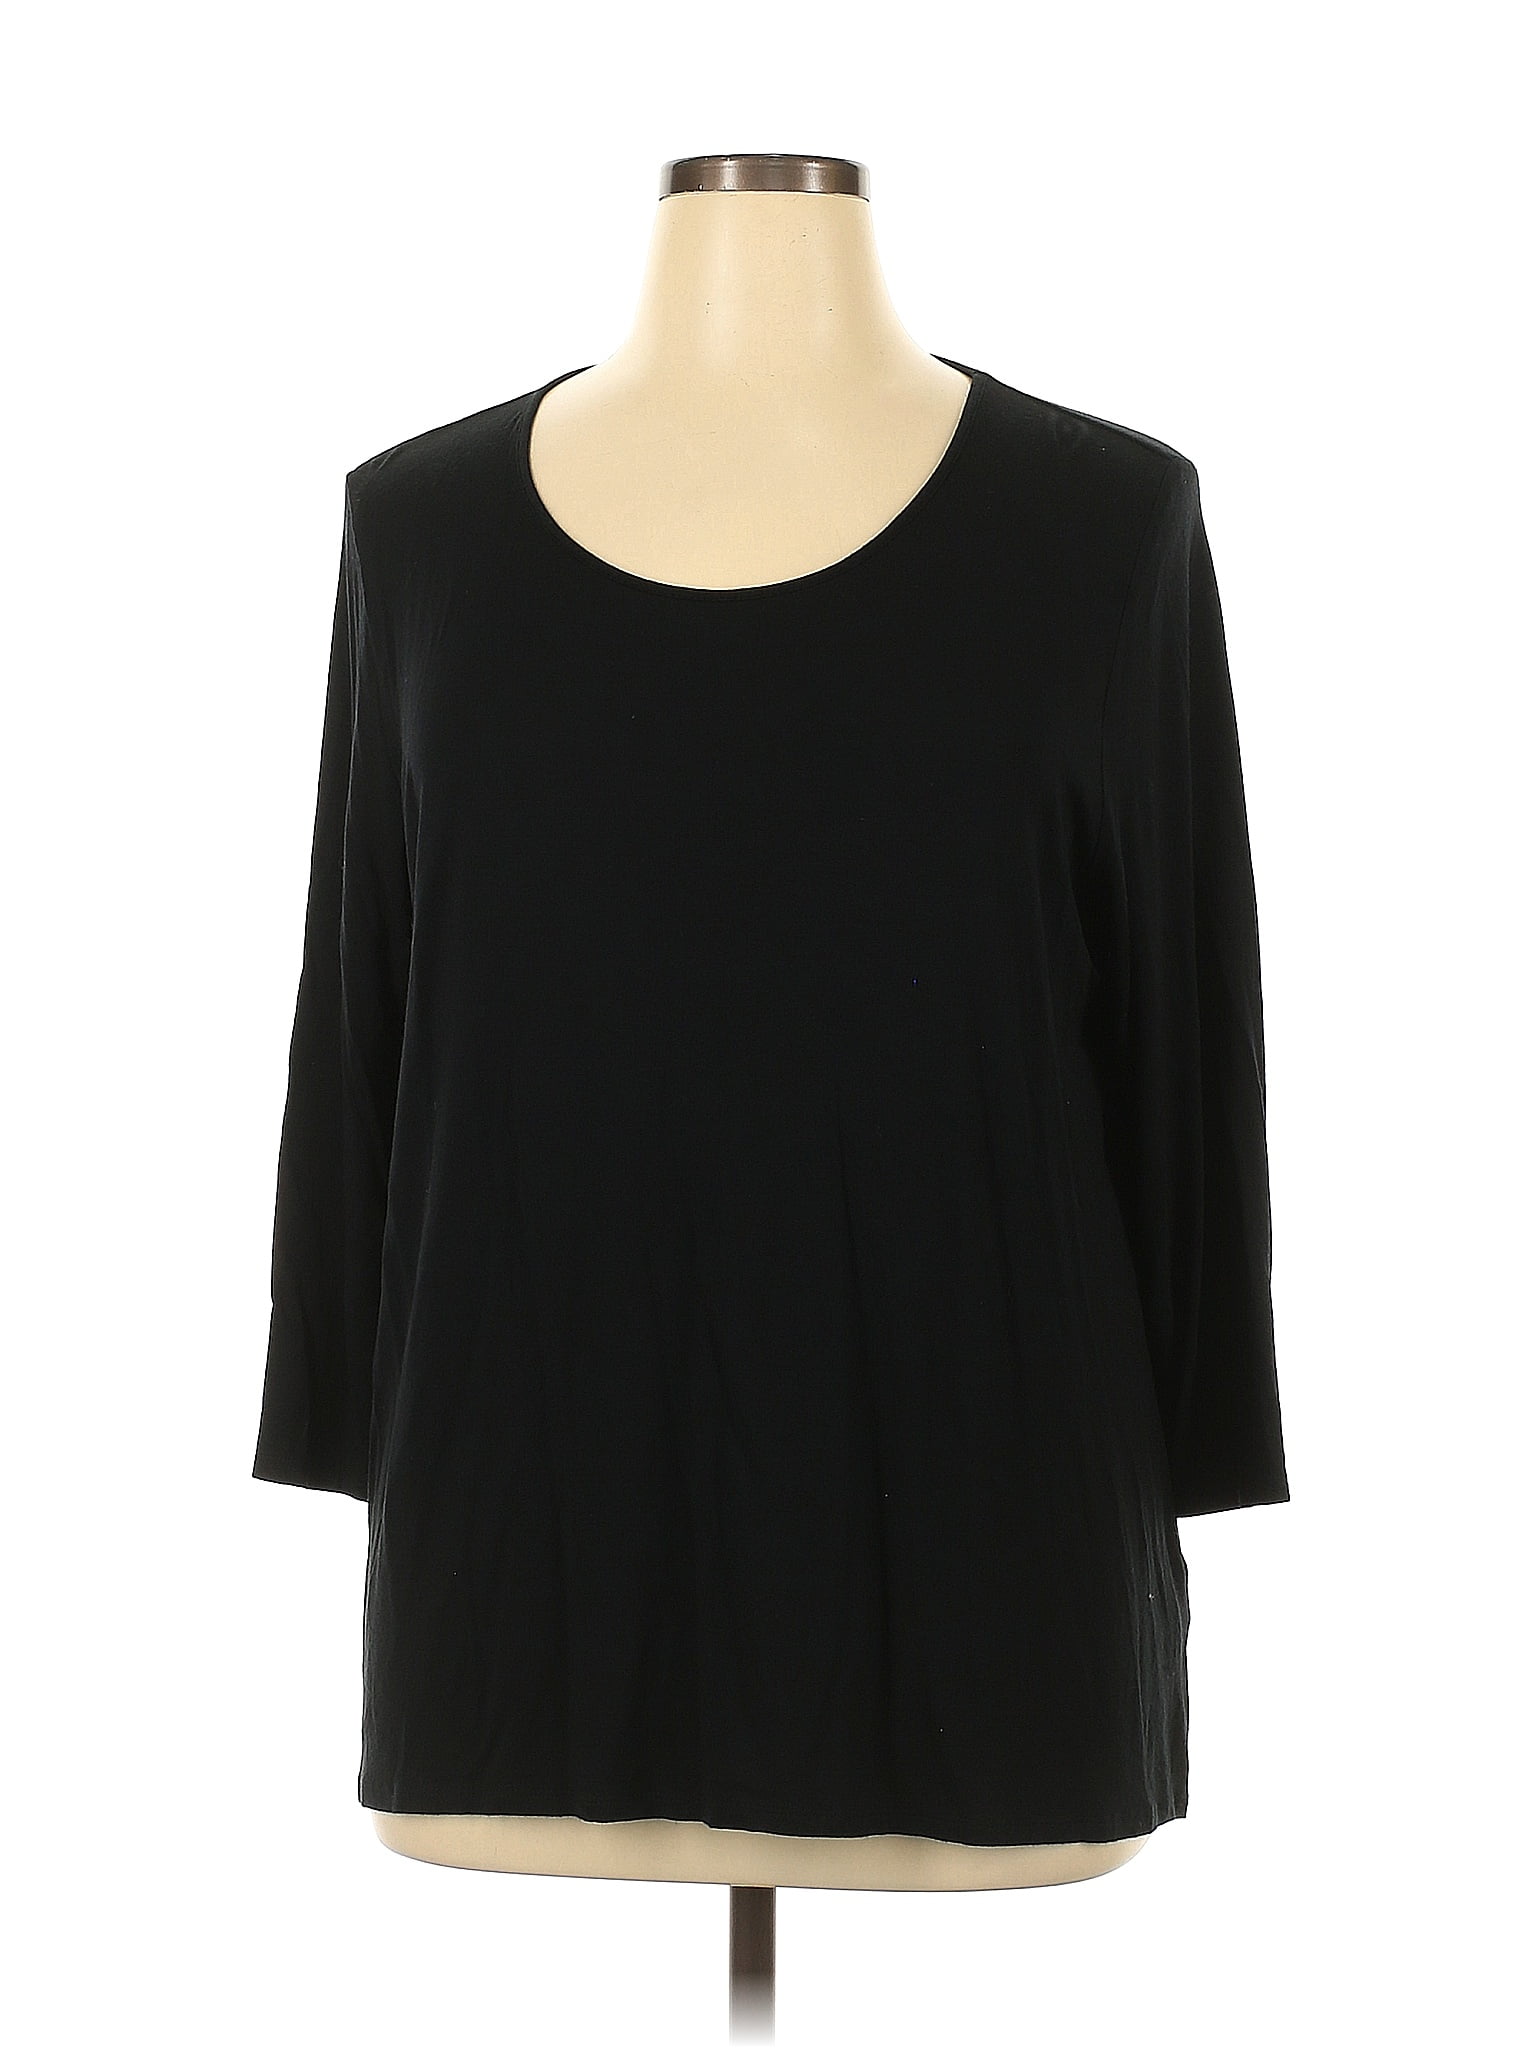 J.Jill Solid Black Long Sleeve T-Shirt Size 4X (Plus) - 35% off